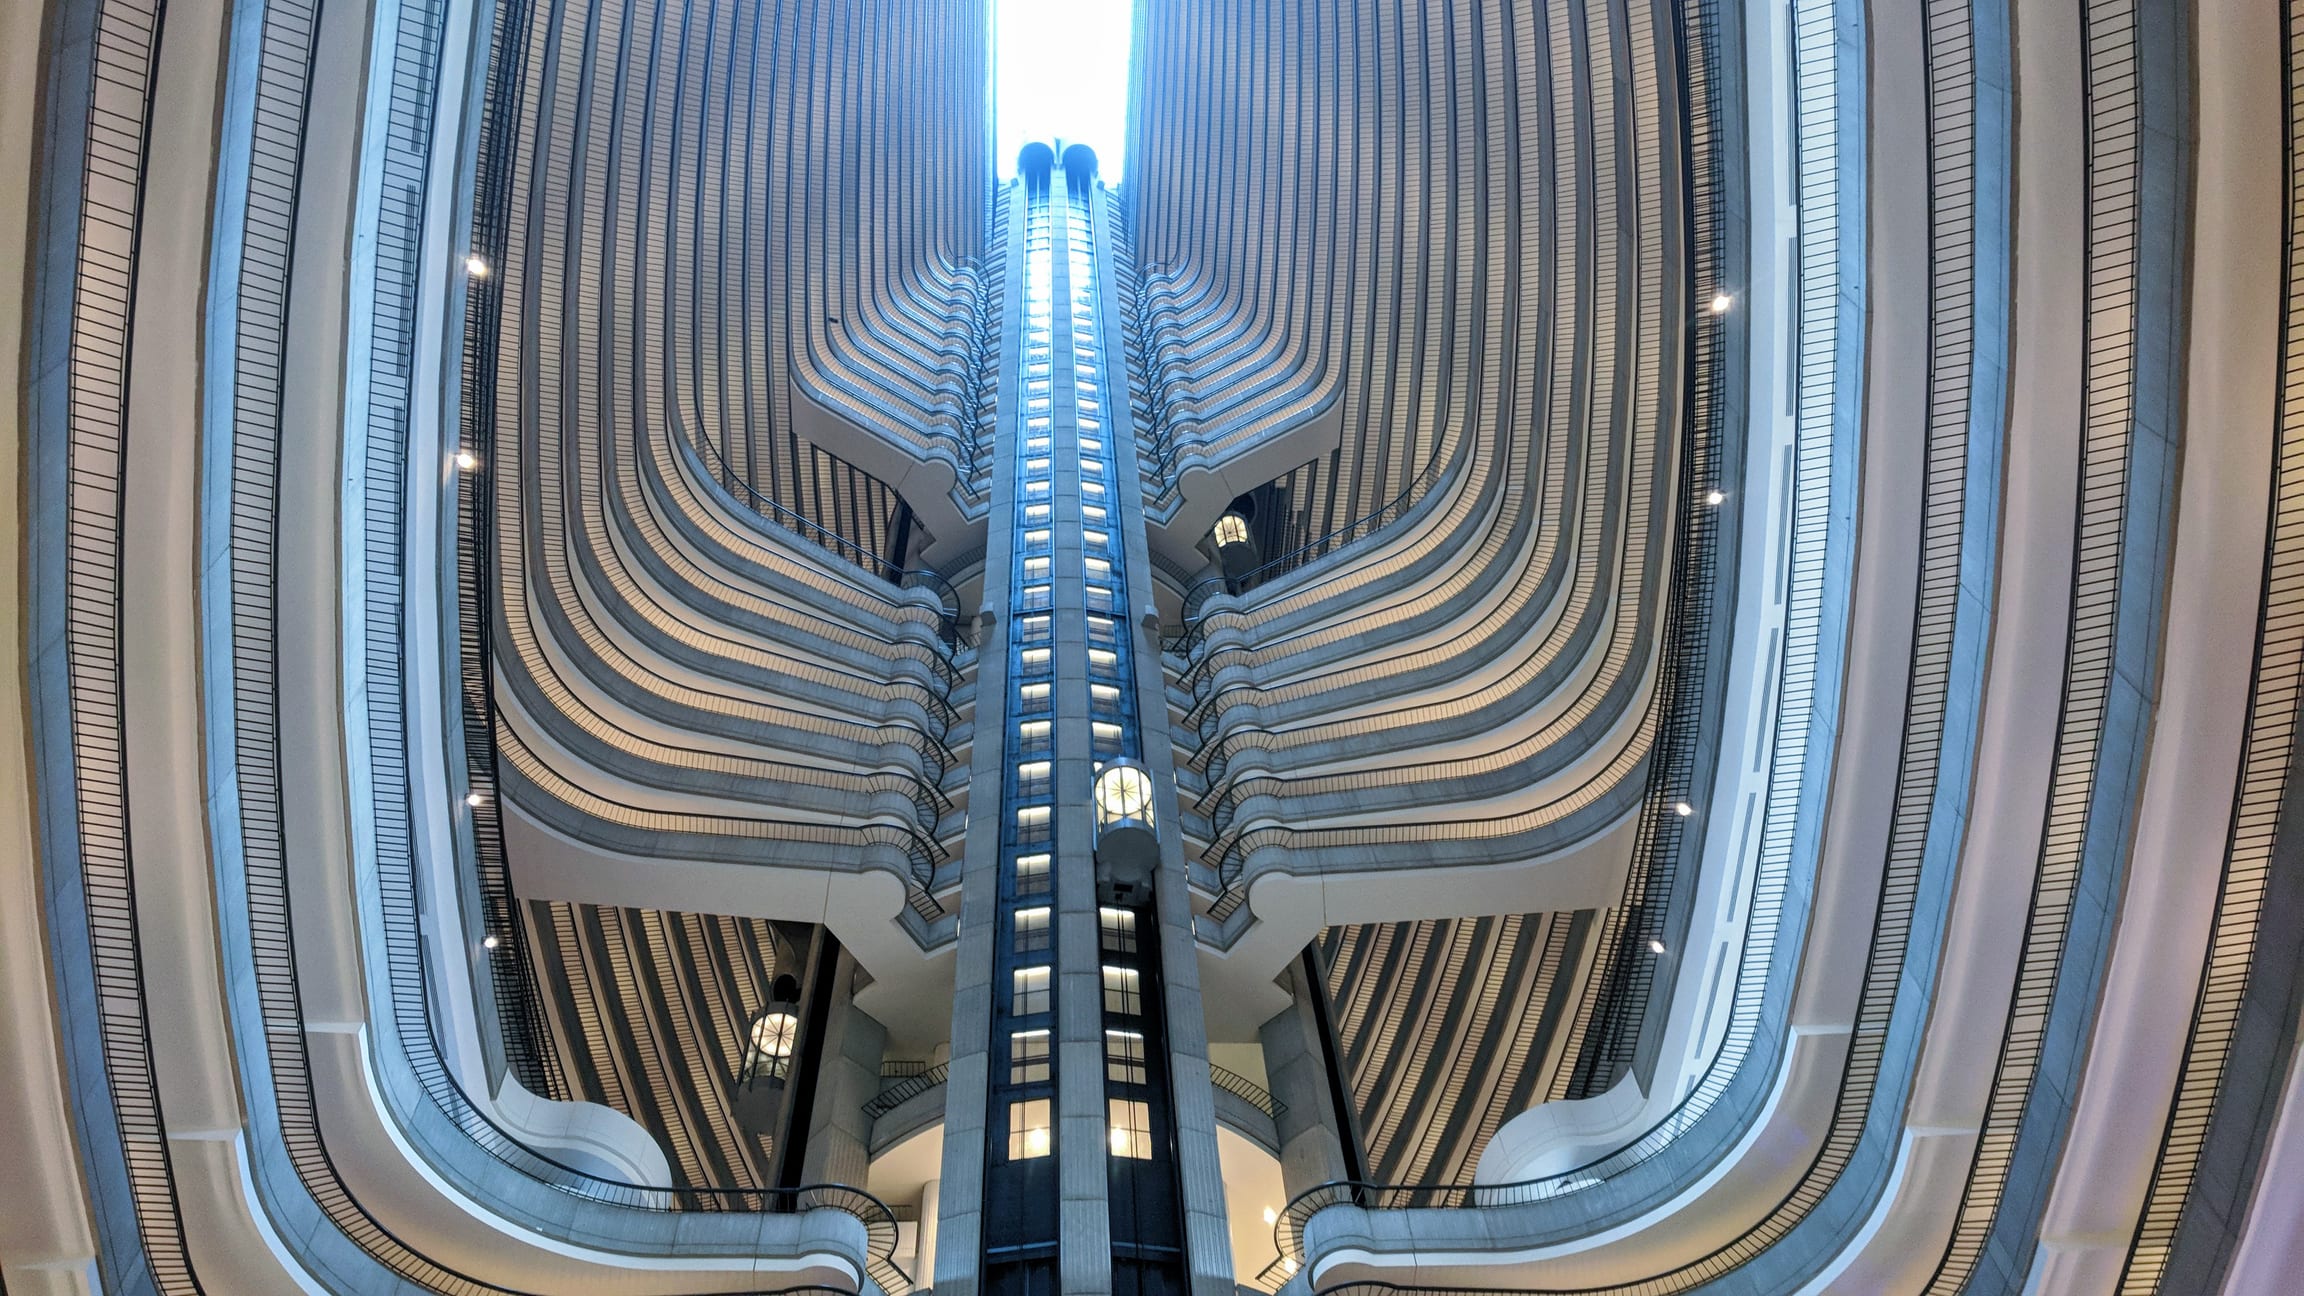 Atlanta Marriott Marquis